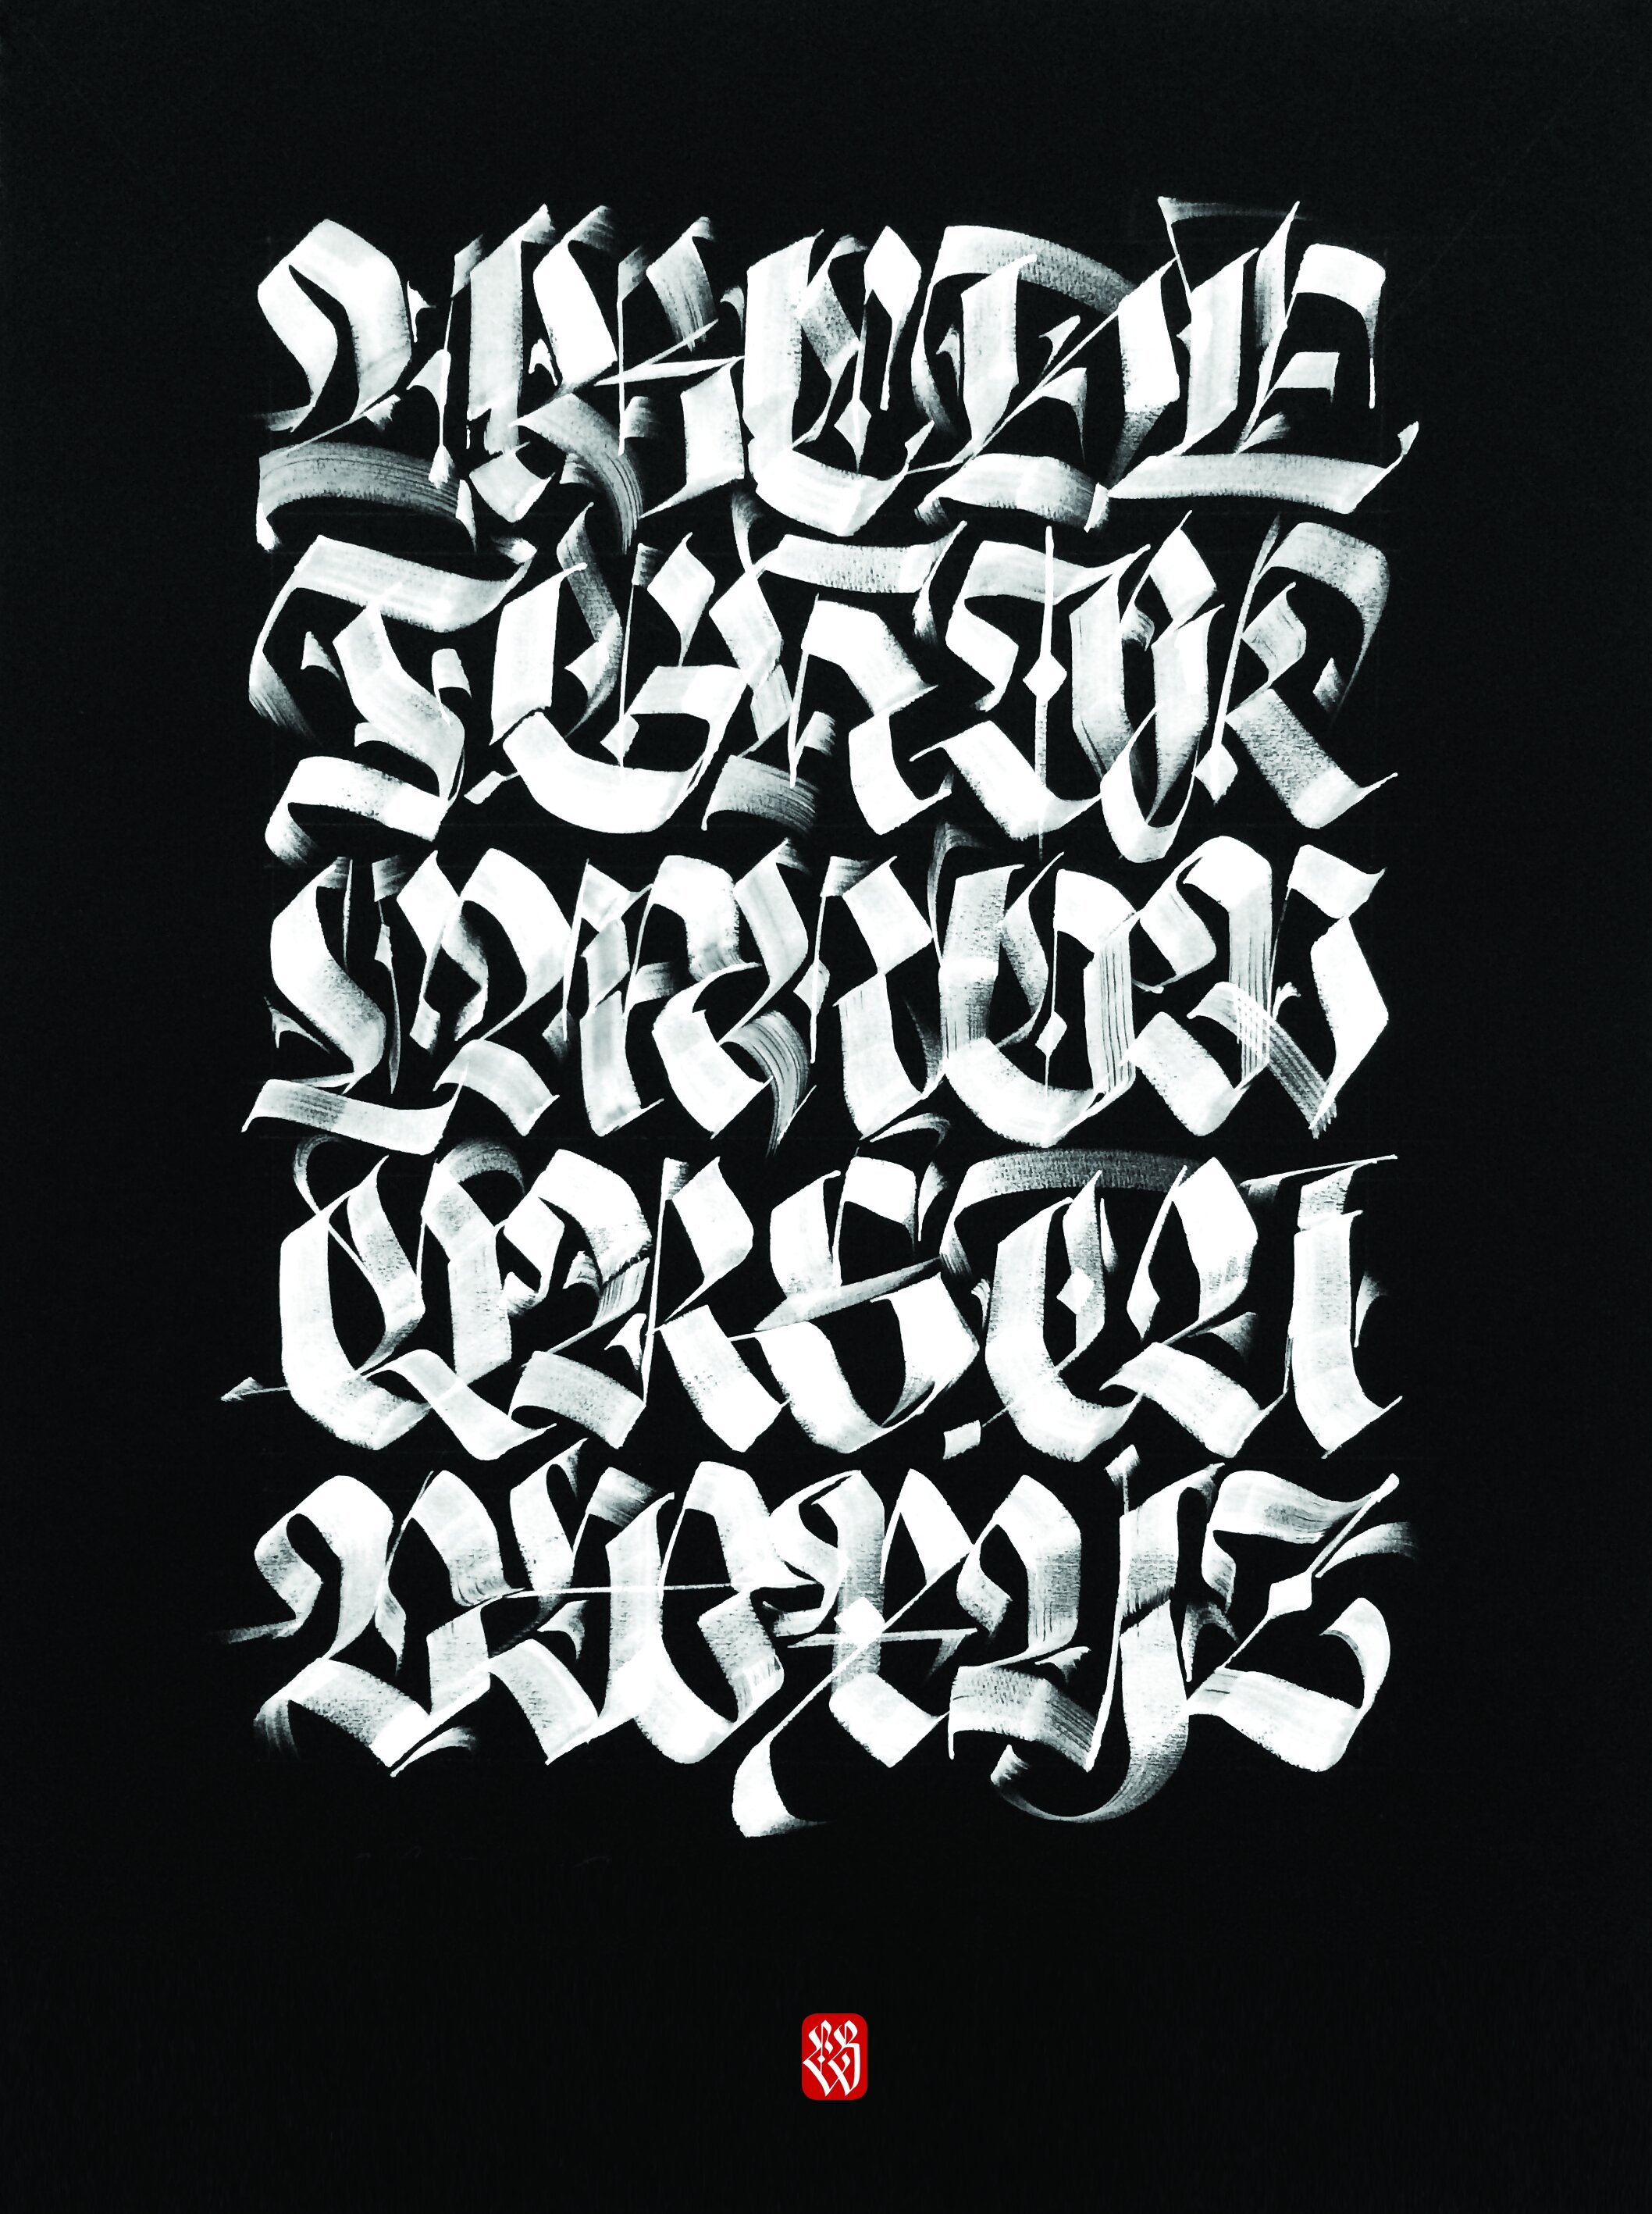 black letter calligraphy